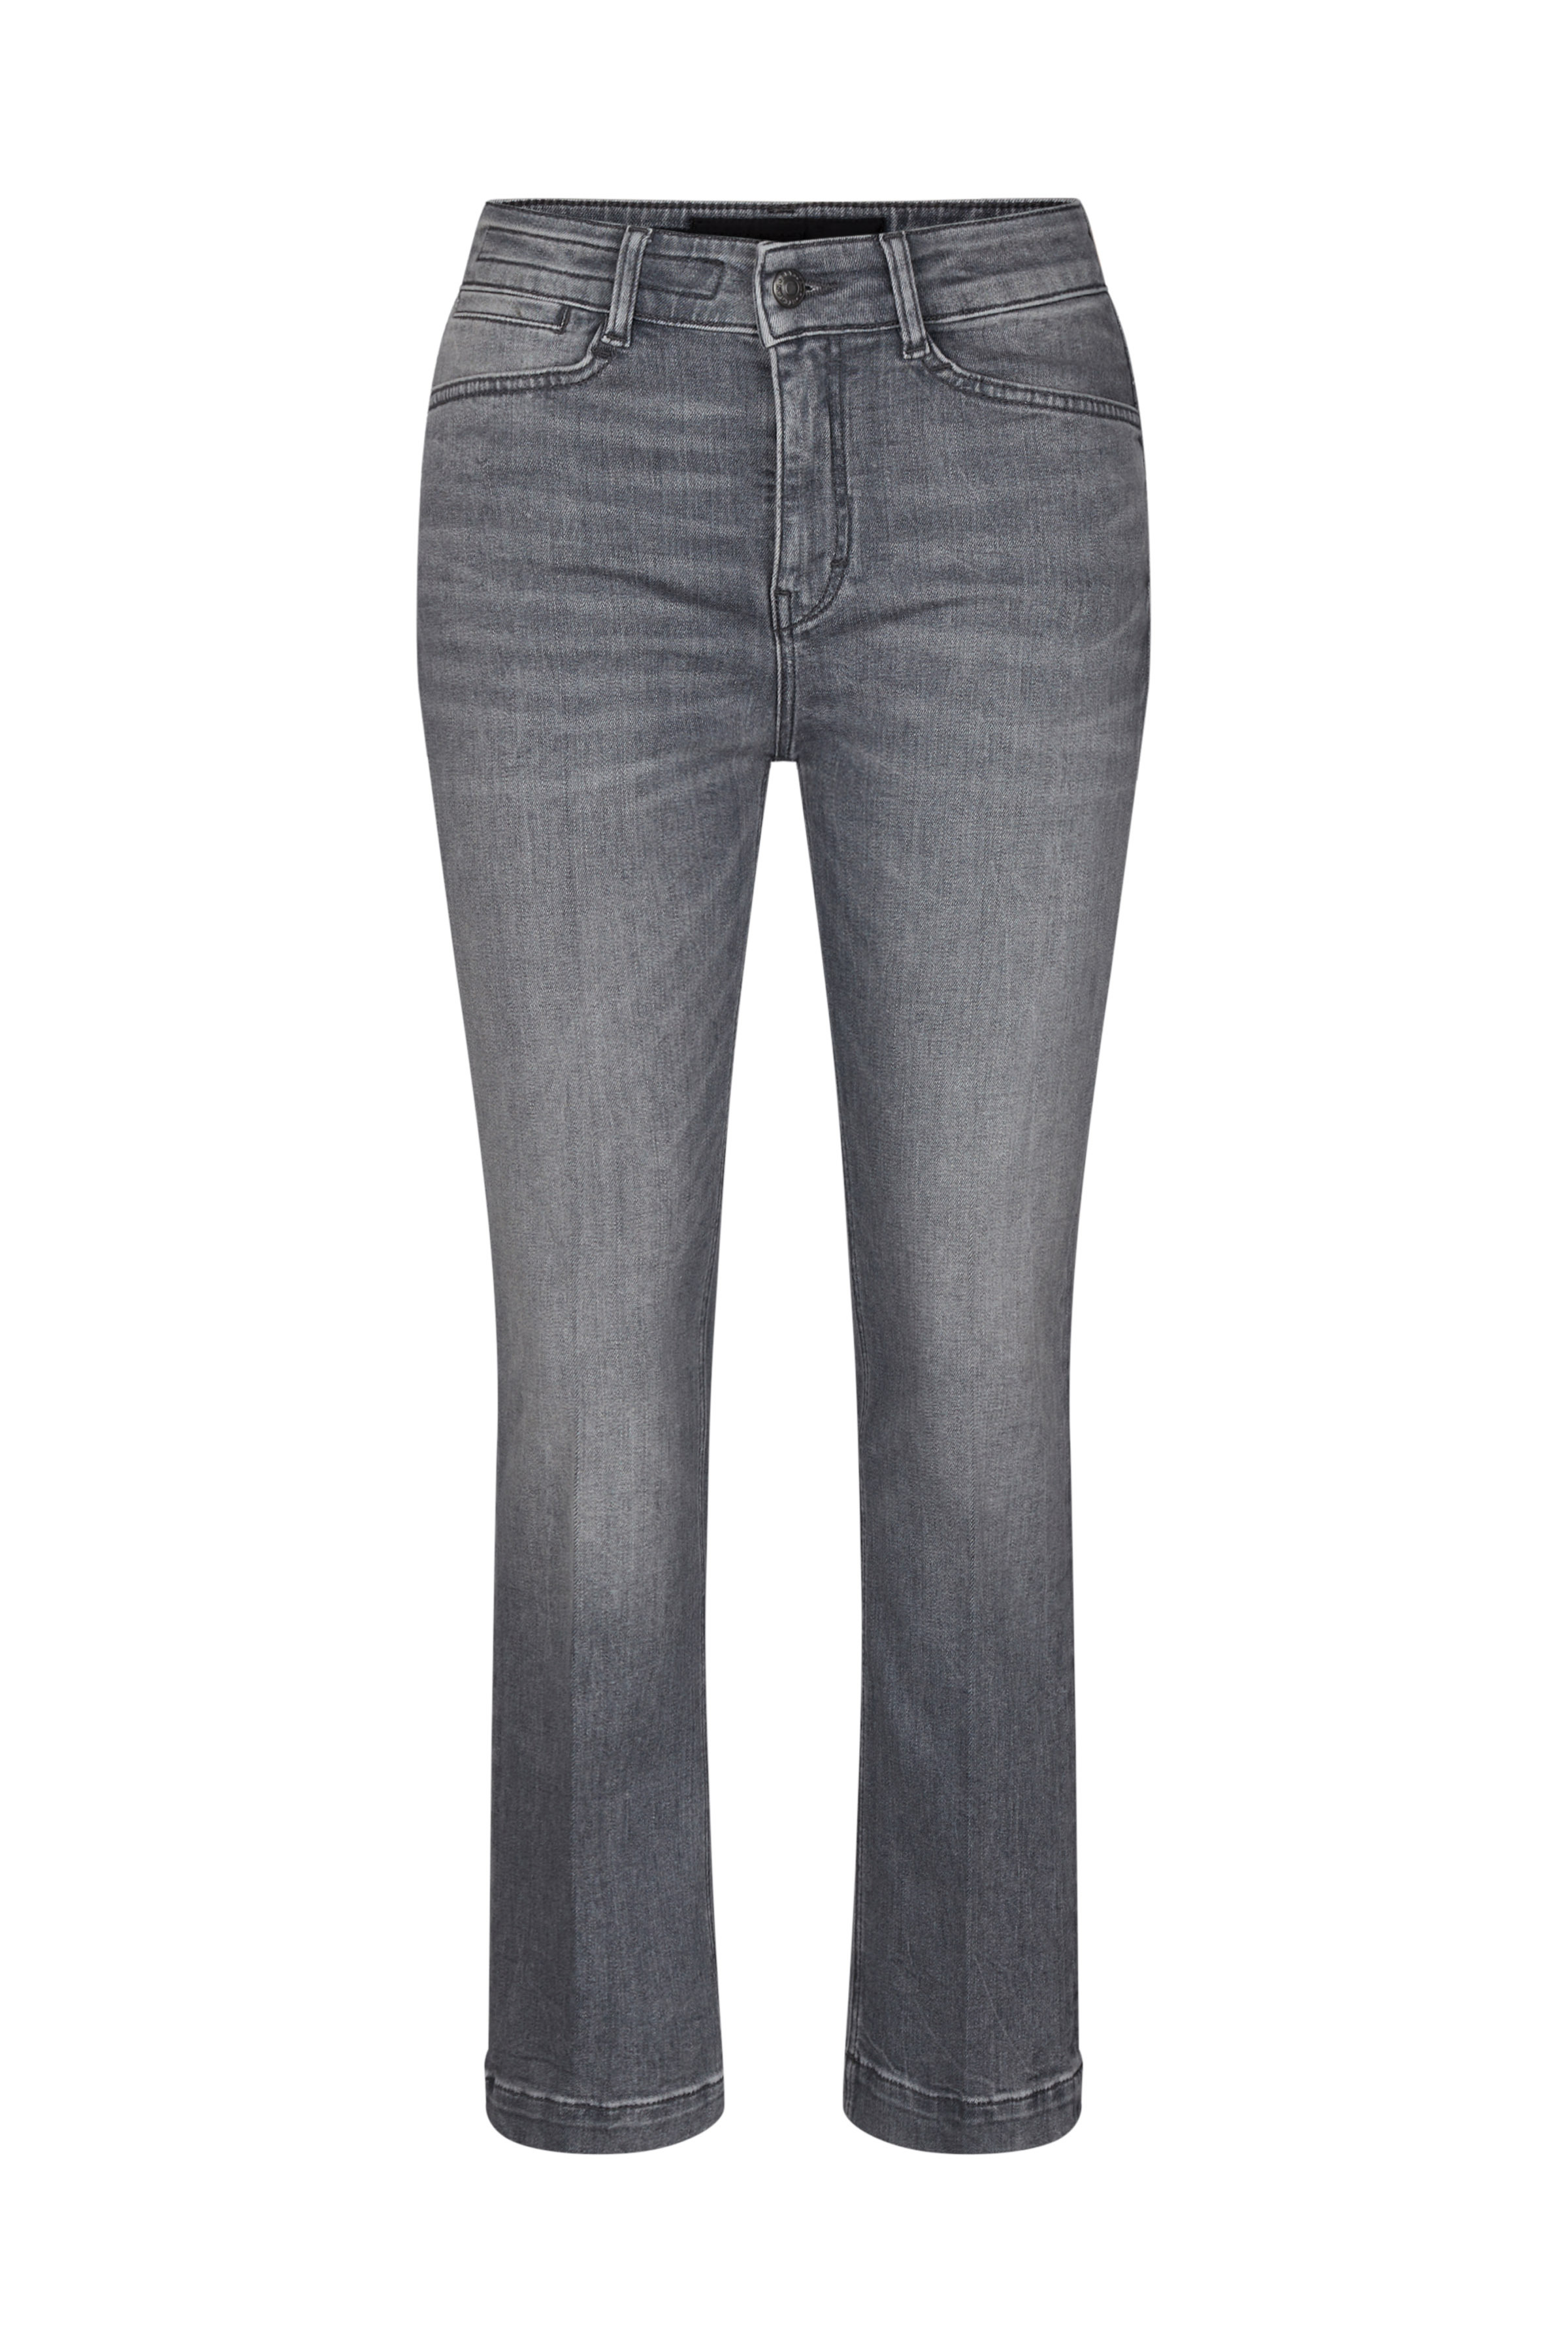 Drykorn Slim Jeans grauviolett-schwarz Casual-Look Mode Jeans Slim Jeans 